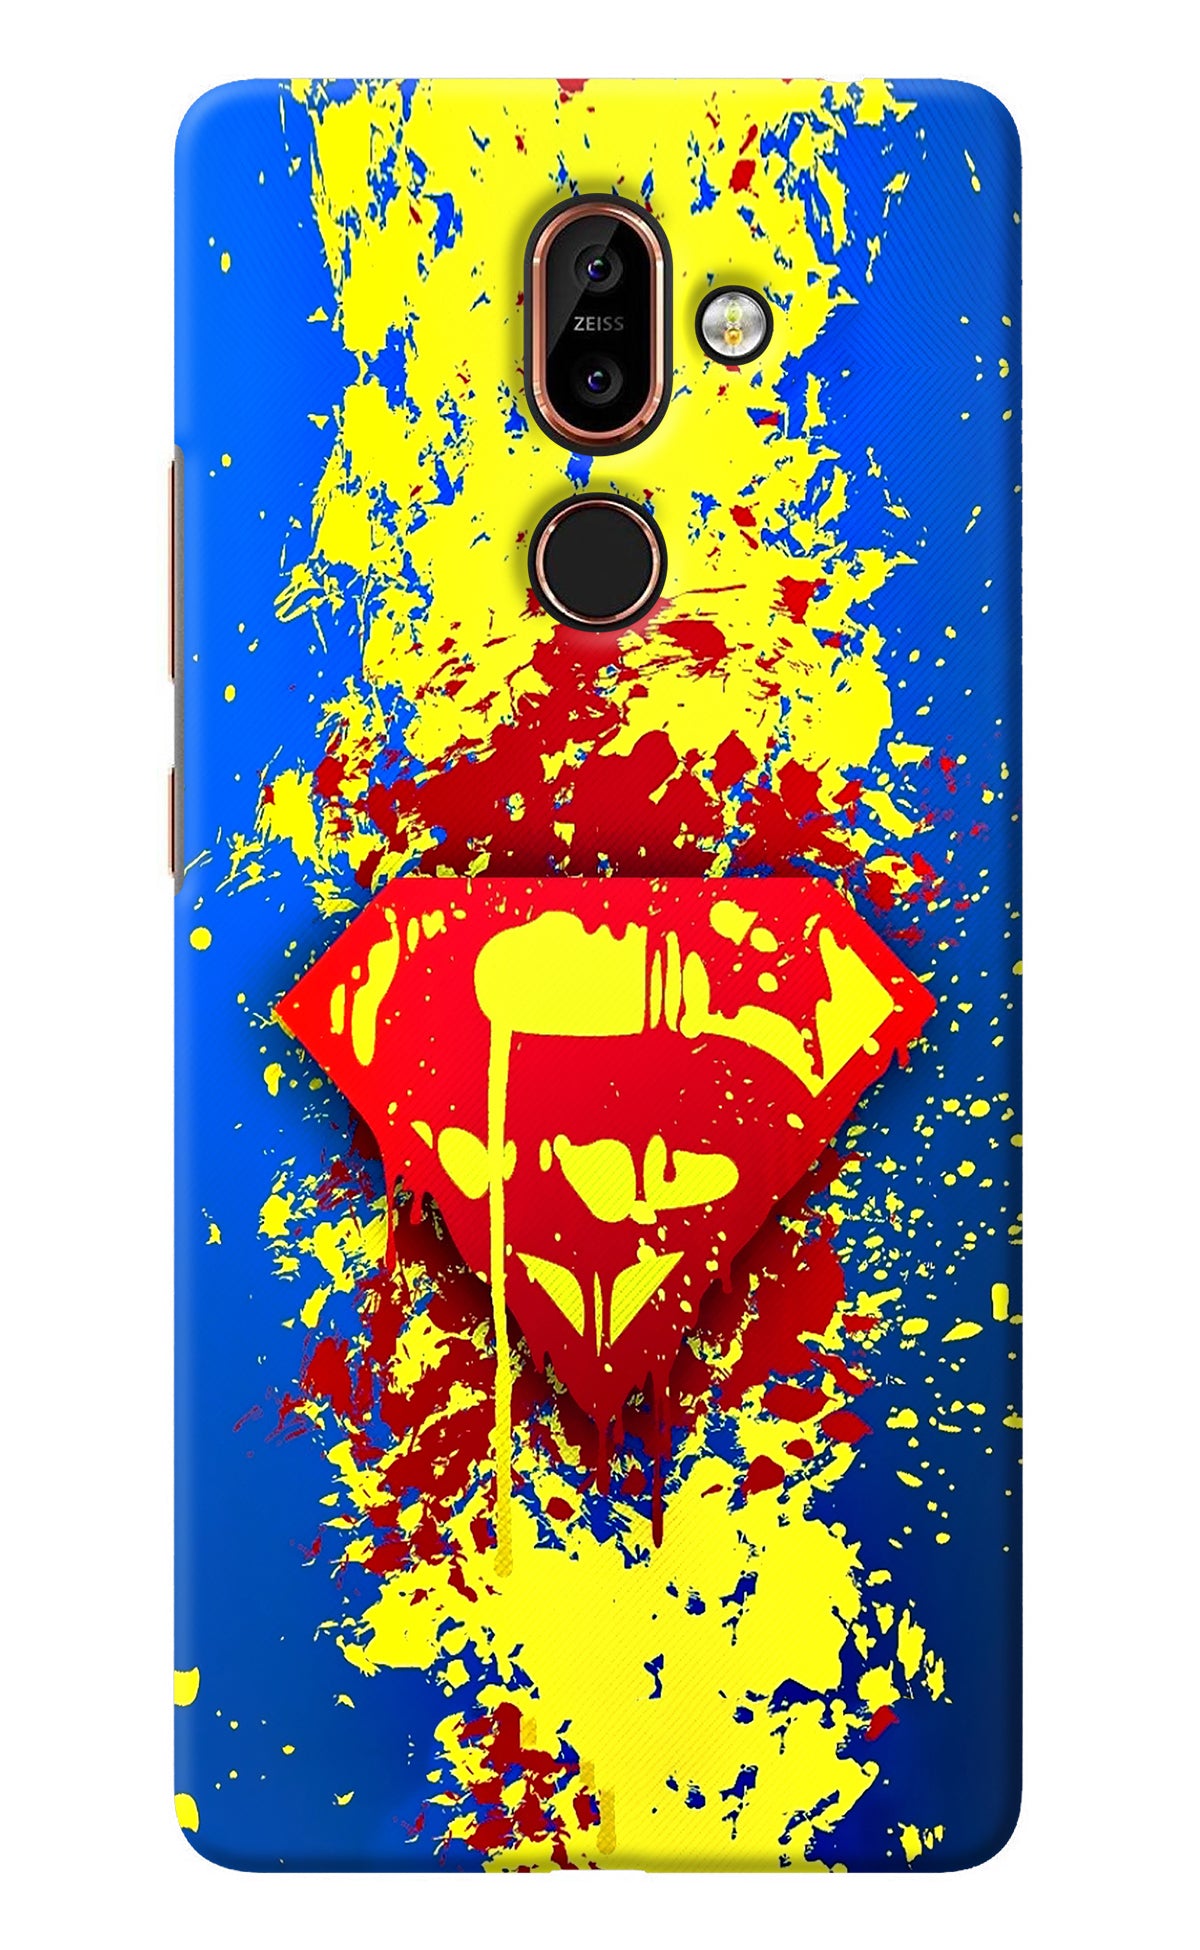 Superman logo Nokia 7 Plus Back Cover